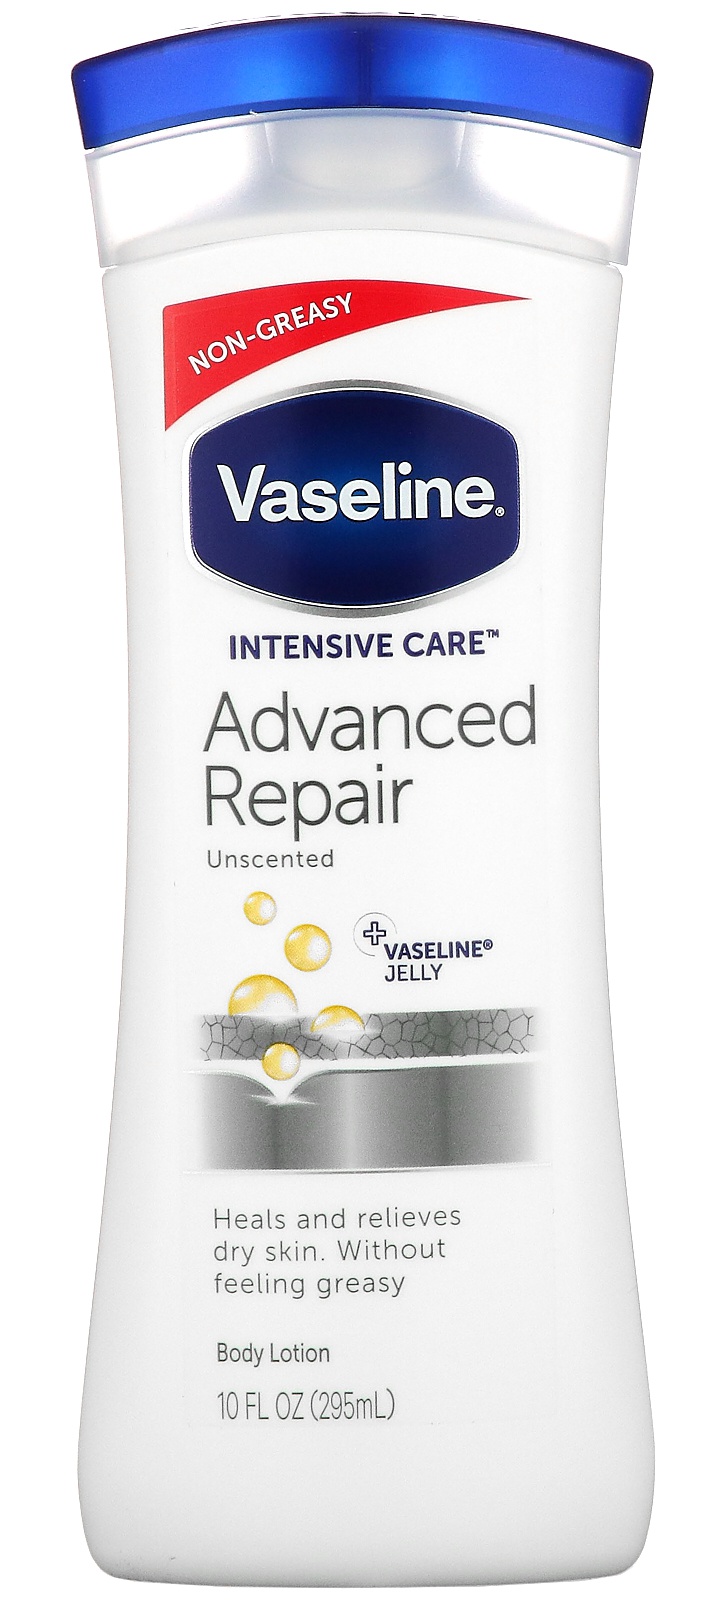 Vaseline Intensive Care™ Advanced Repair Unfragranced Body Lotion